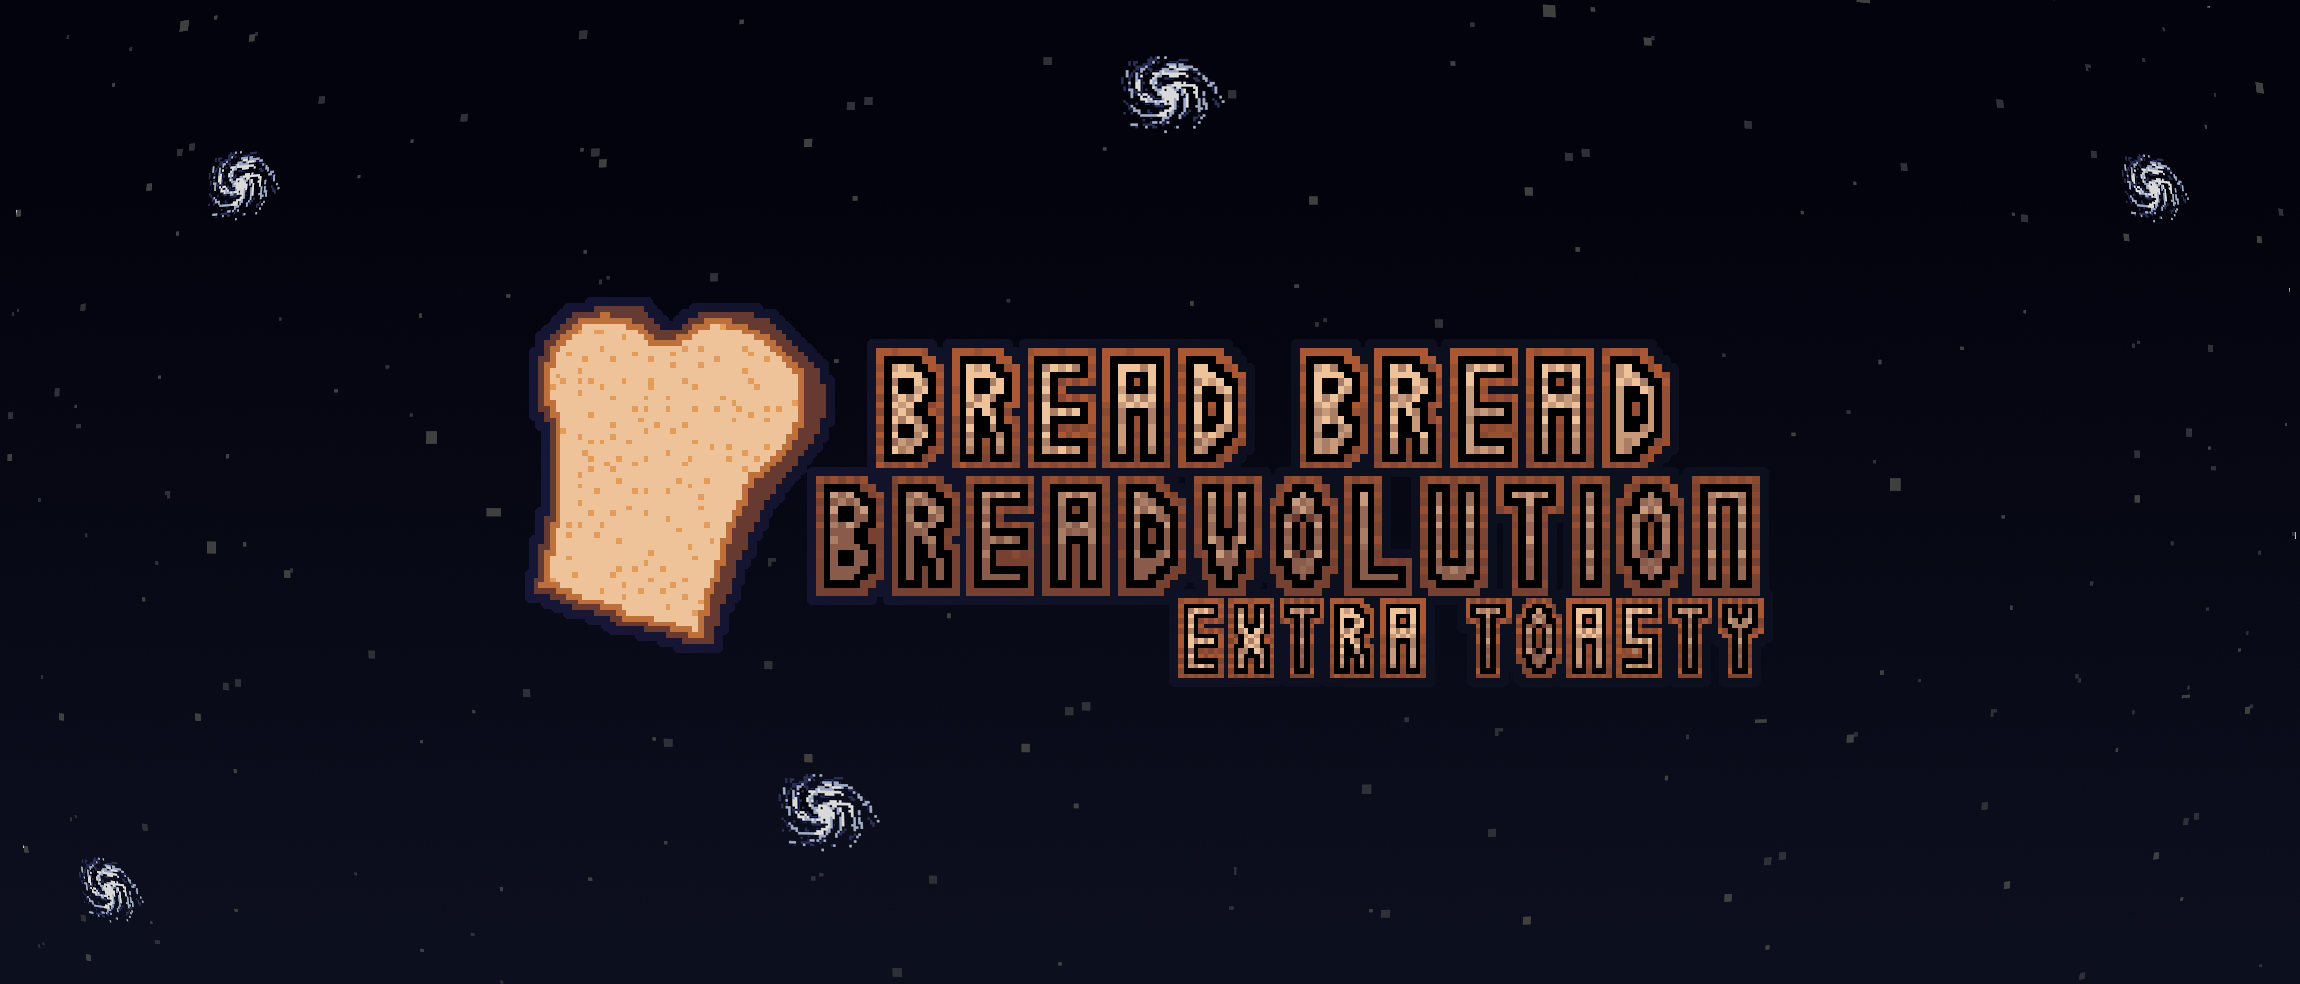 Bread Bread Breadvolution: Extra Toasty